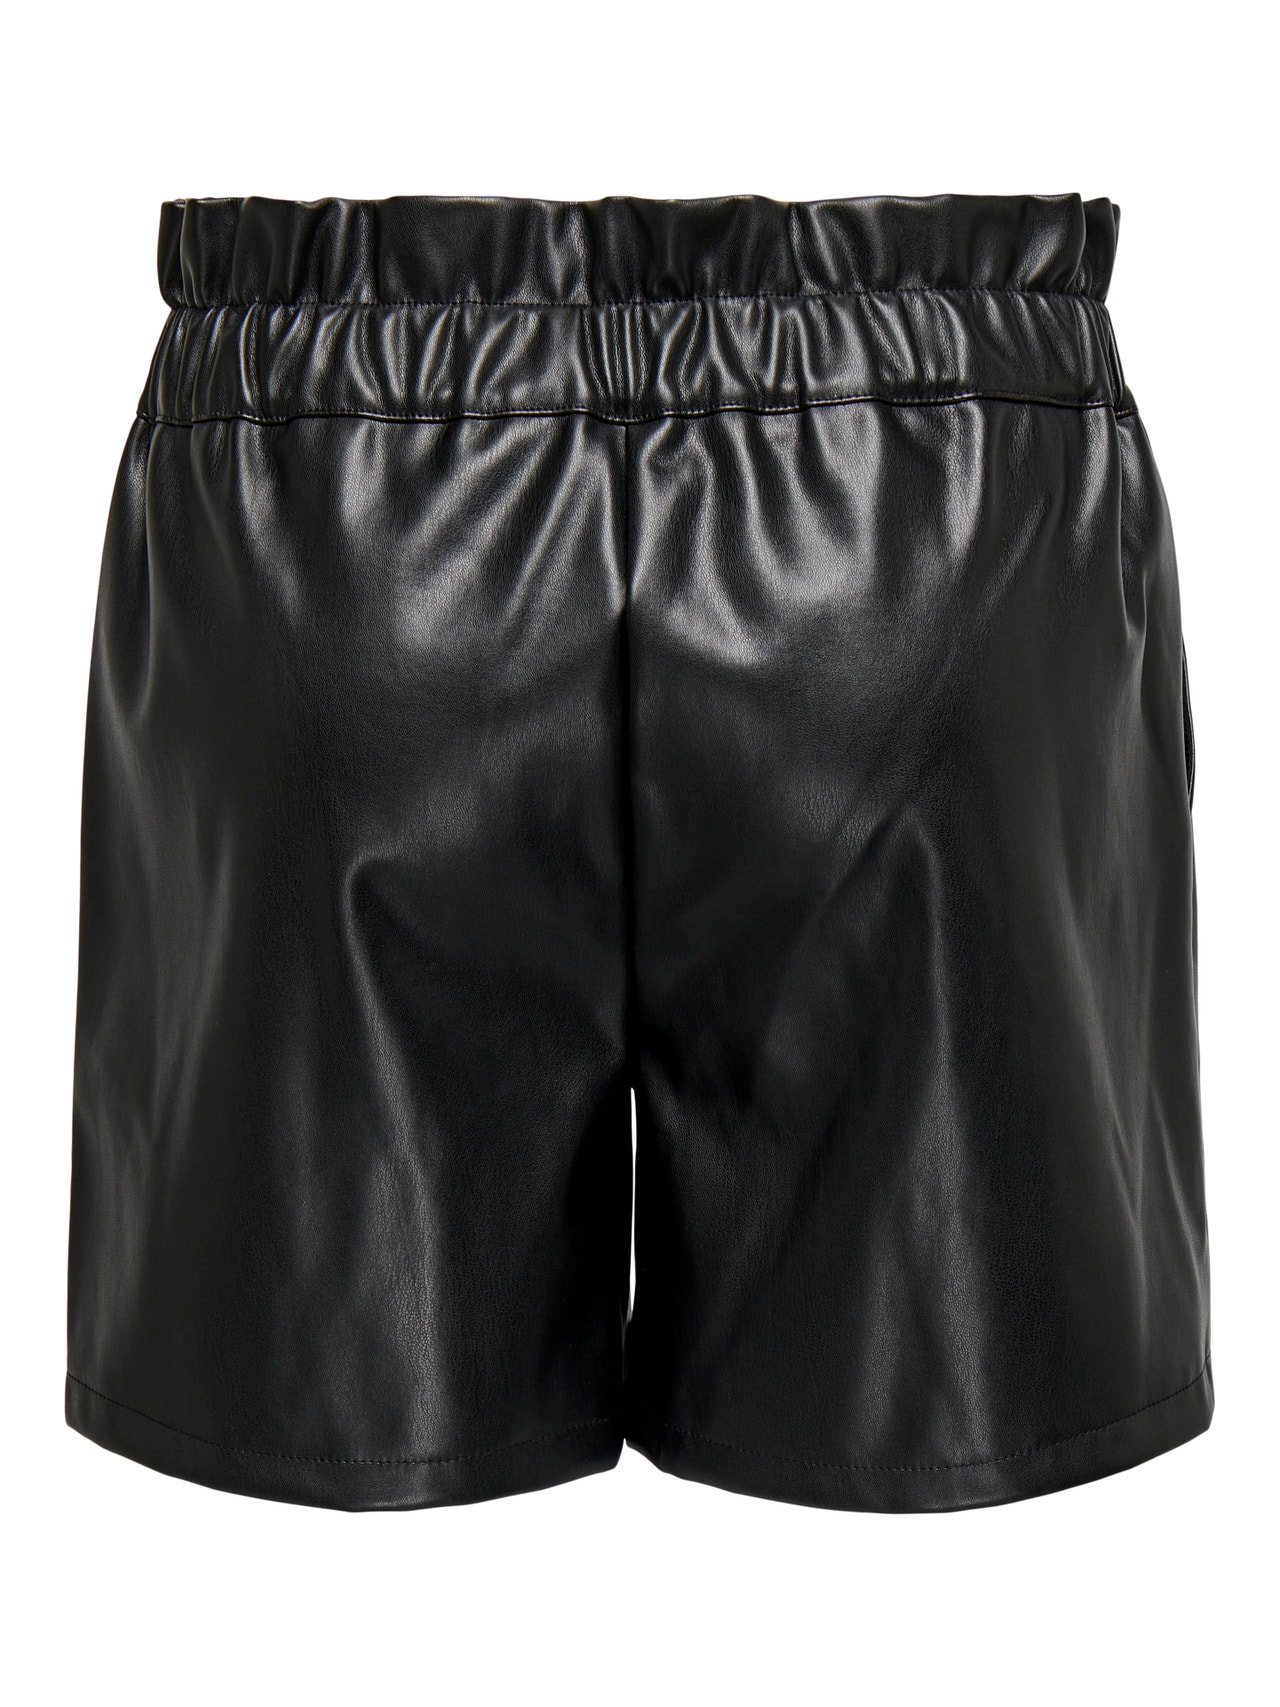 ONLY Läderimitation Shorts -Black - 15289126